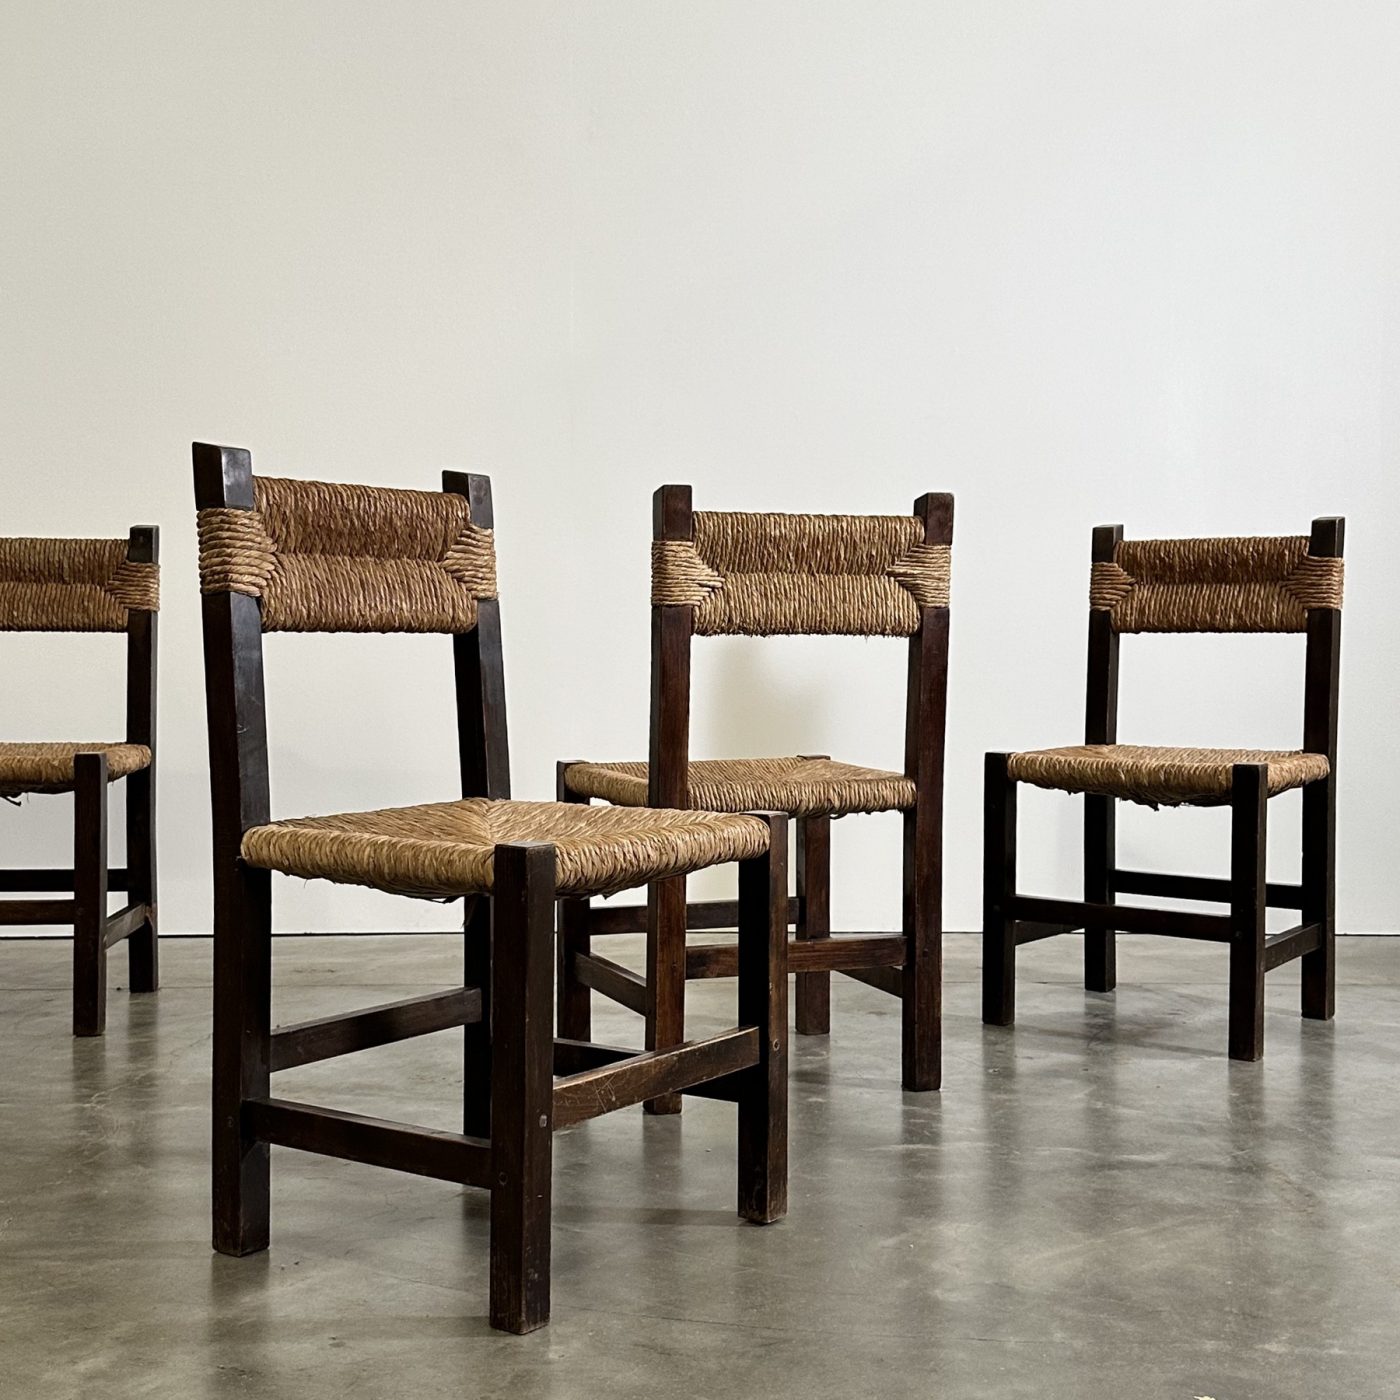 objet-vagabond-straw-chairs0001